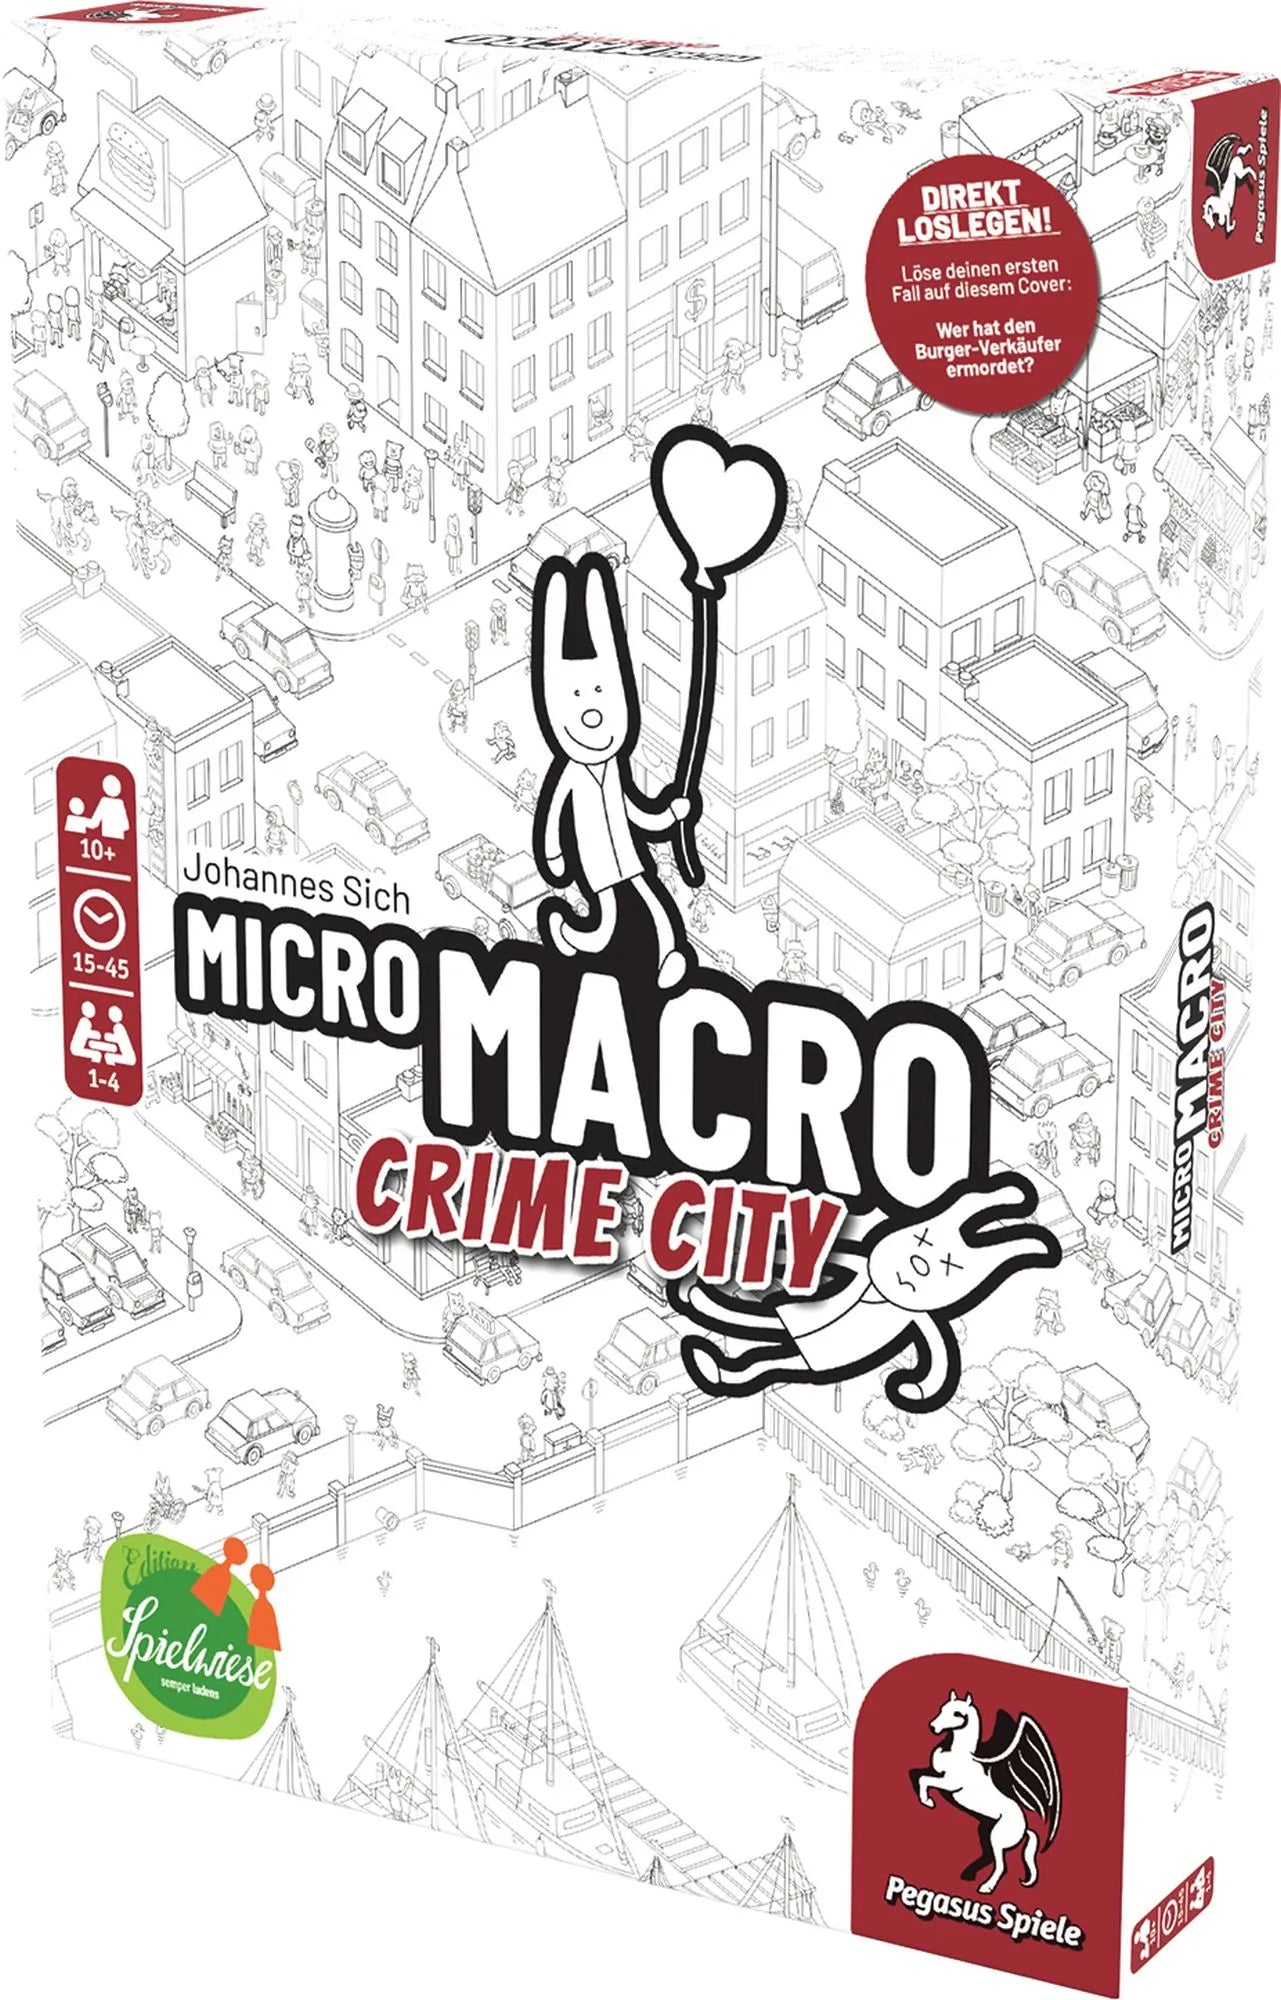 MicroMacro Crime City - eine BUNTE HAND Empfehlung